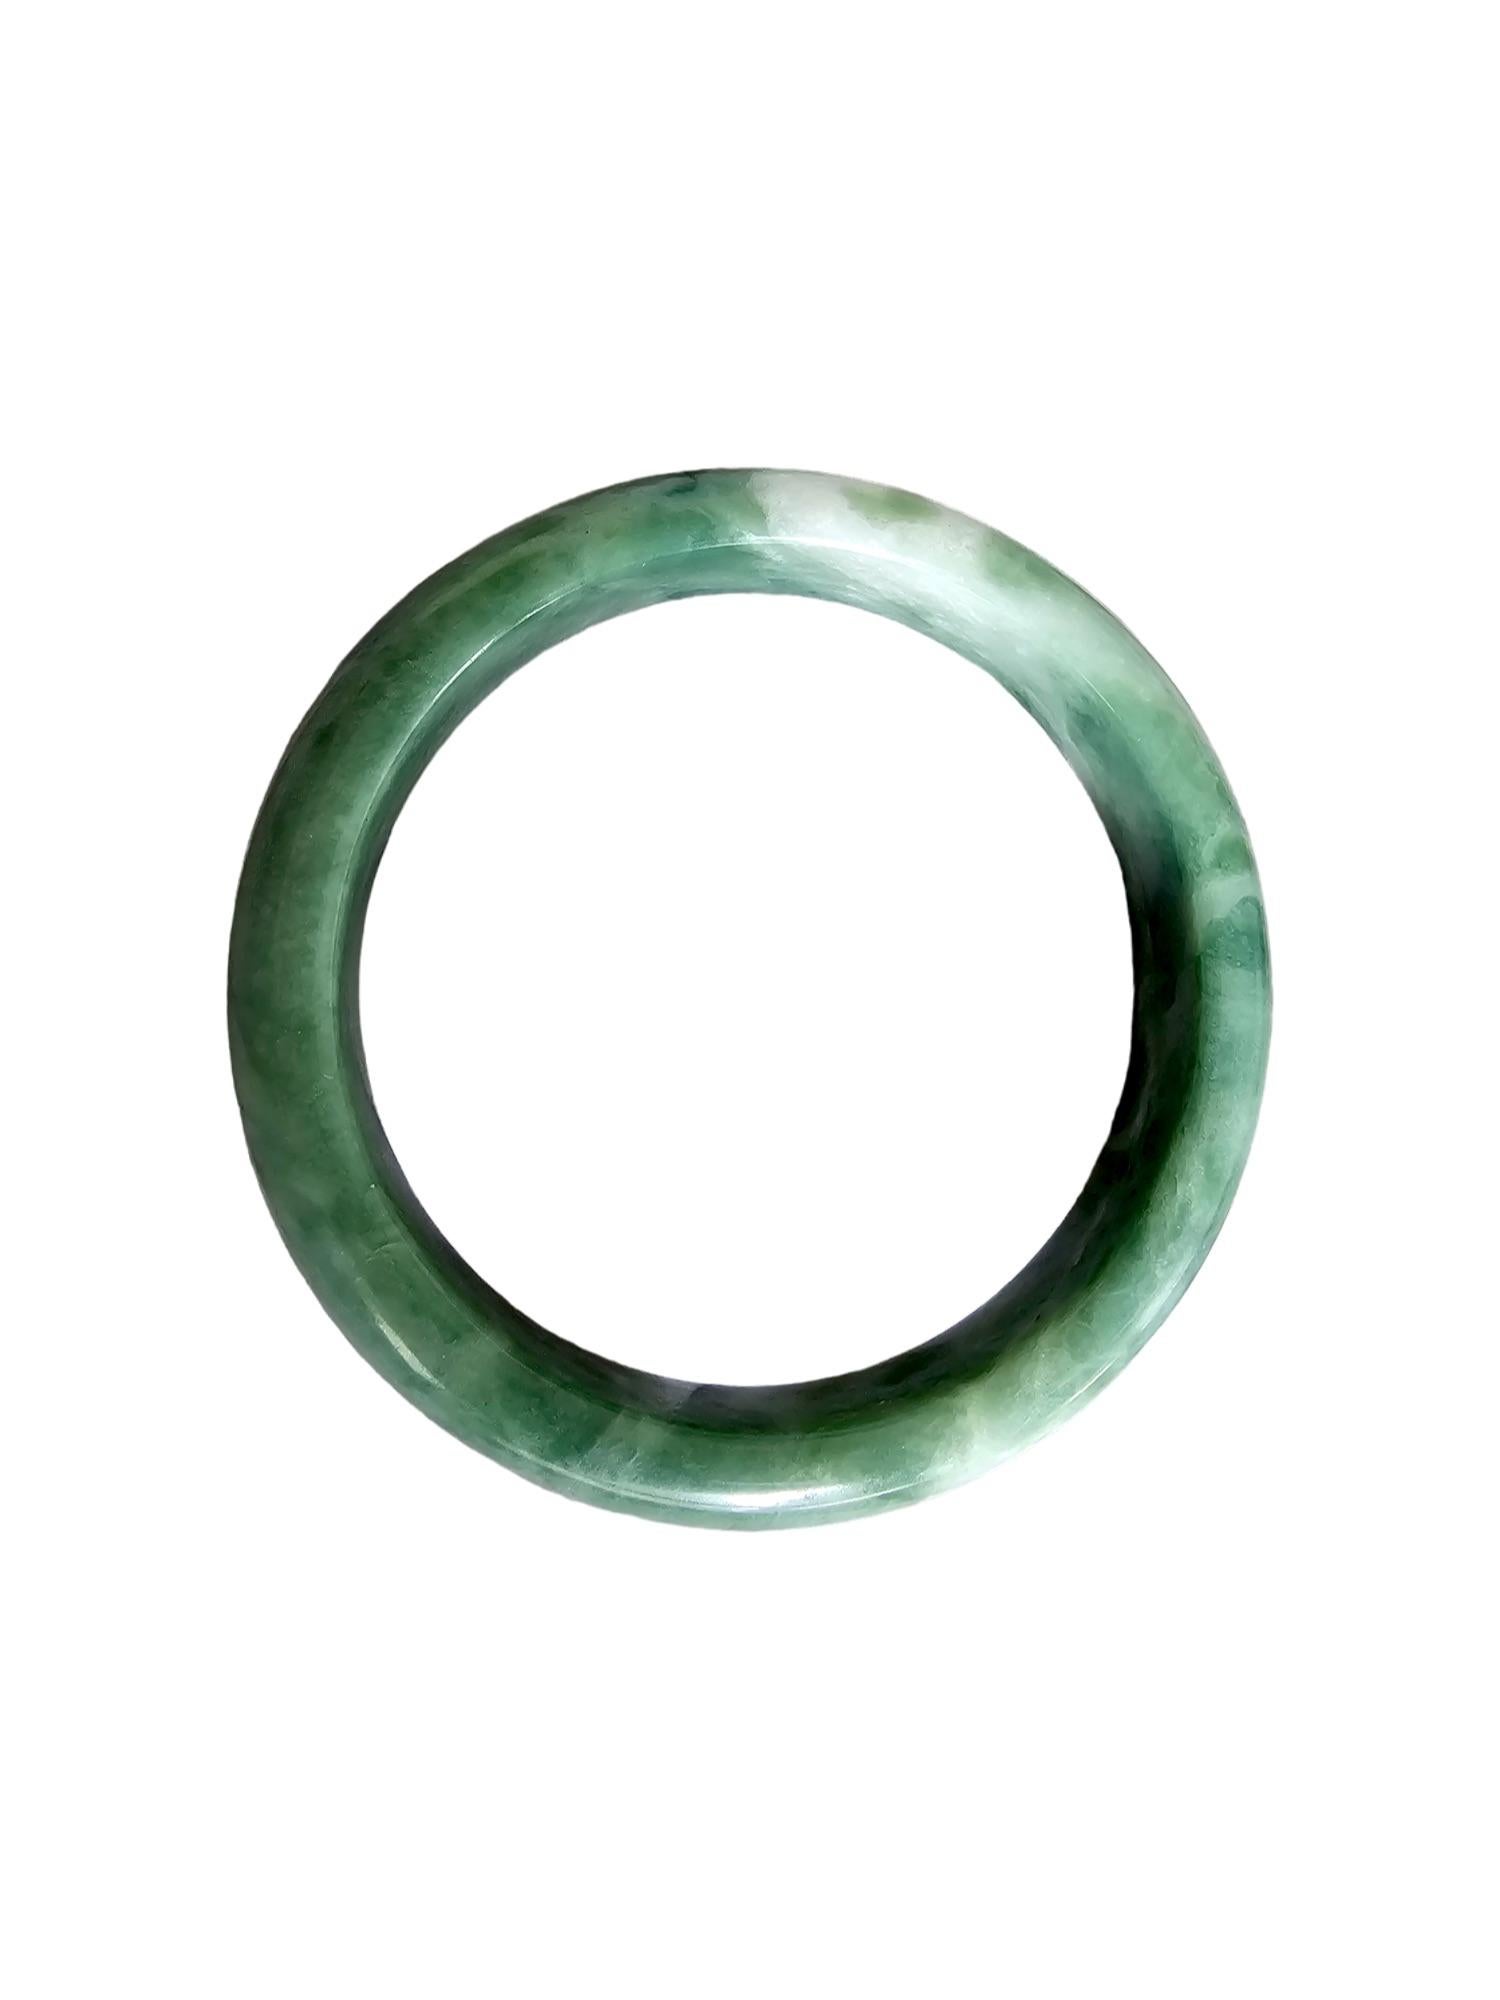 Mixed Cut Earth's Burmese A-Jade Bangle Bracelet (MADE IN JAPAN) Green Jadeite 08808 For Sale